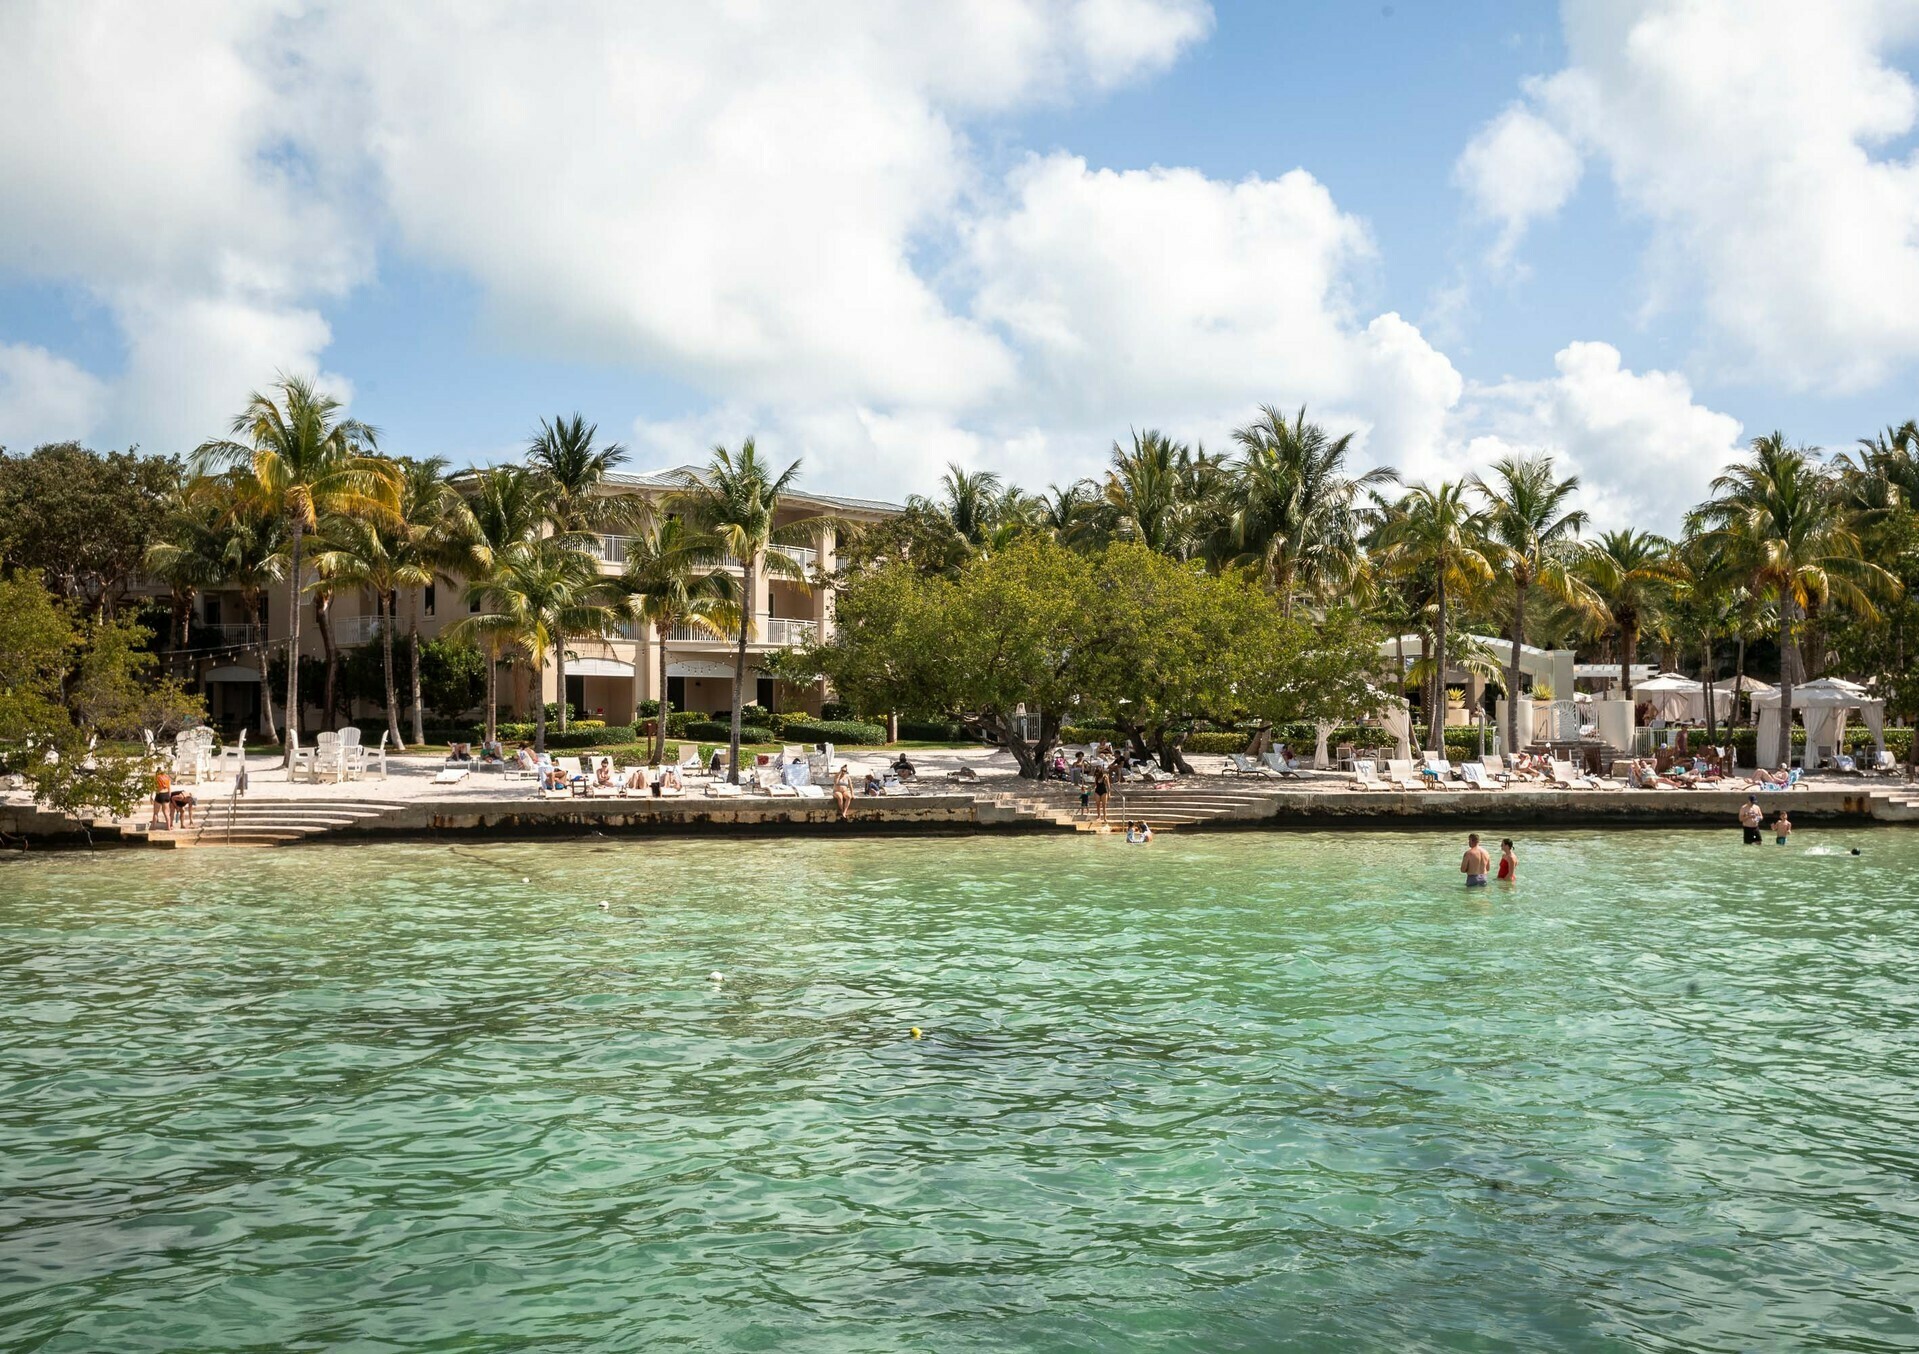 Playa Largo Resort & Spa